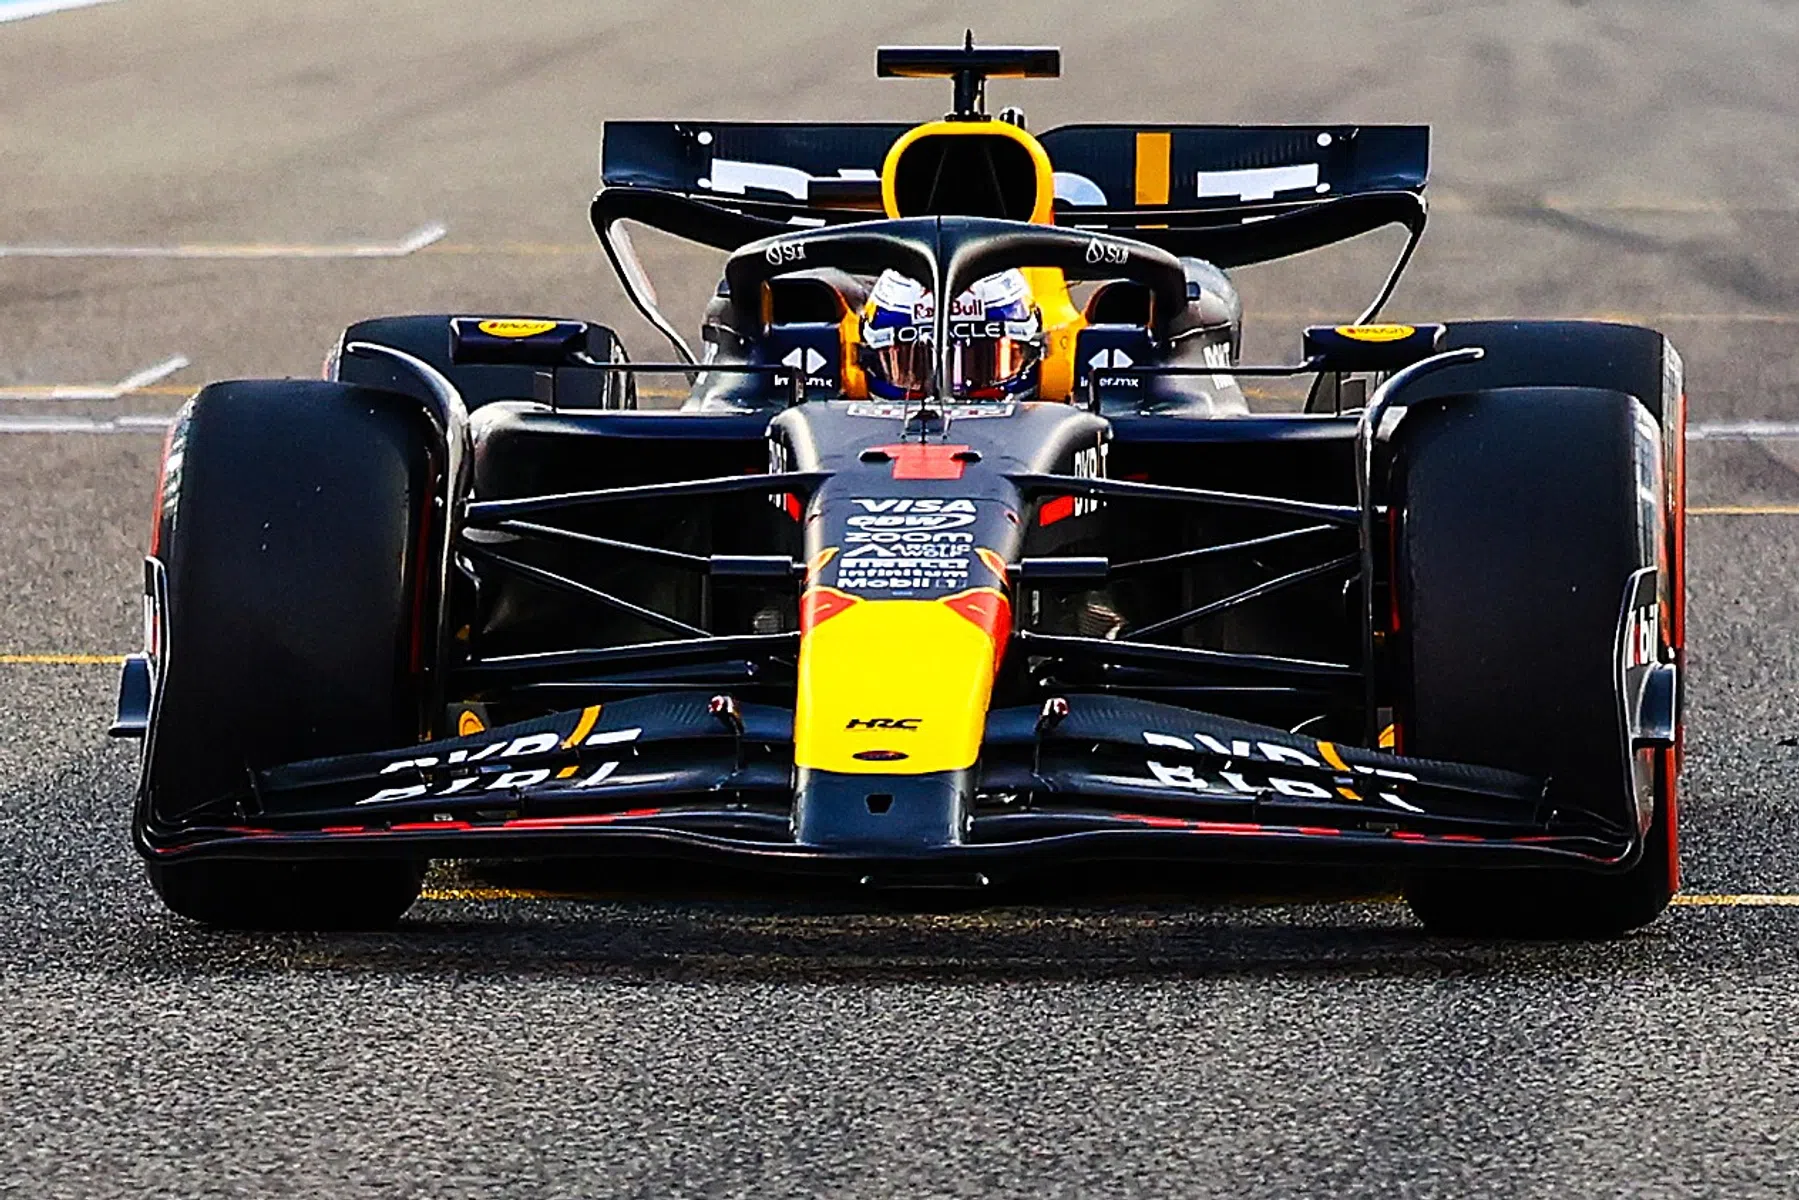 Mega accordo tra Red Bull Racing e sponsor